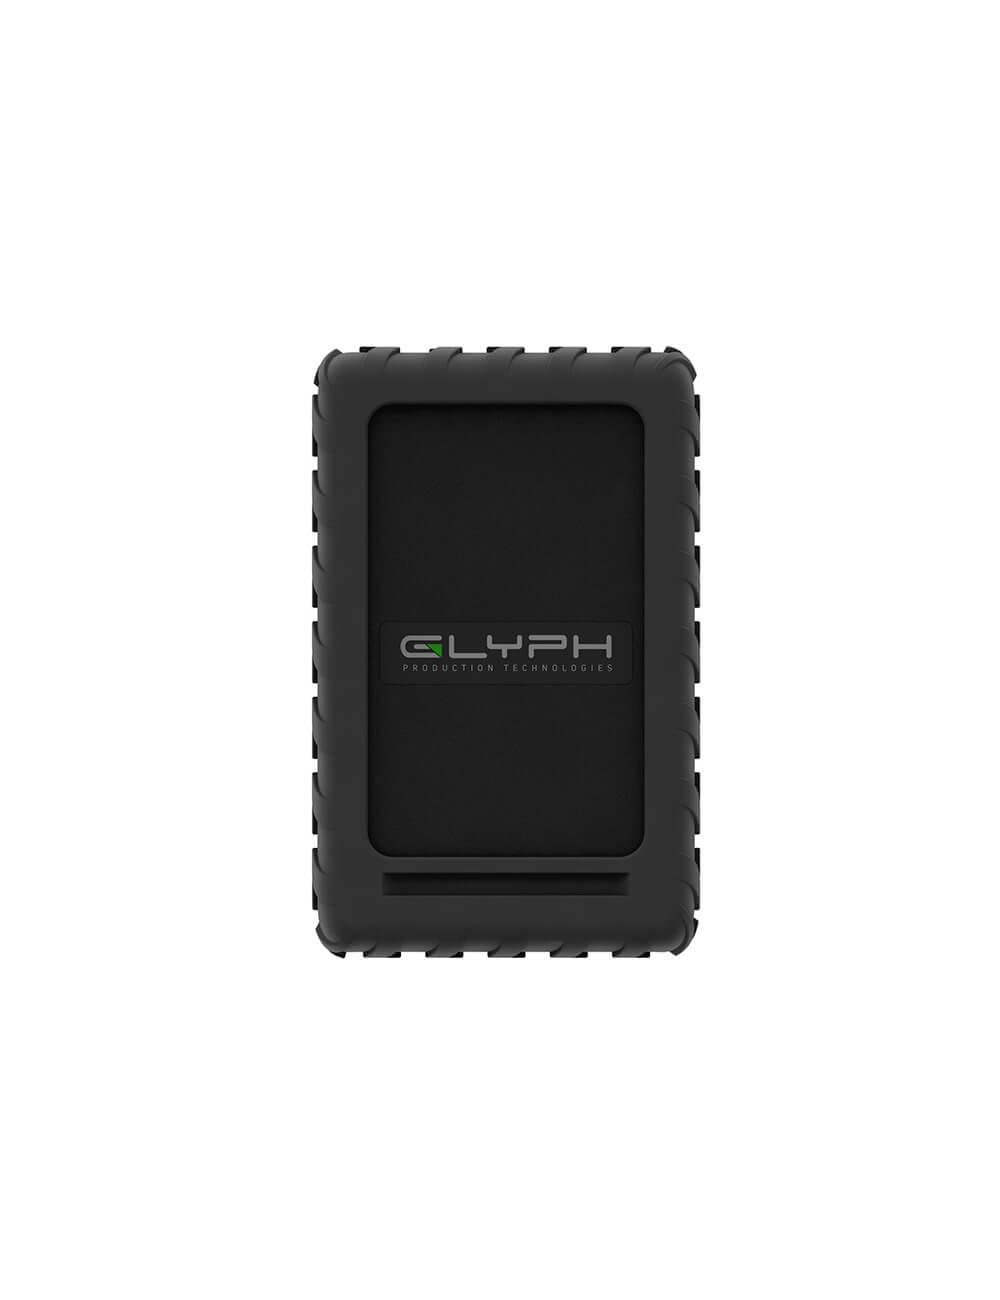 Glyph Blackbox Plus SSD 8TB